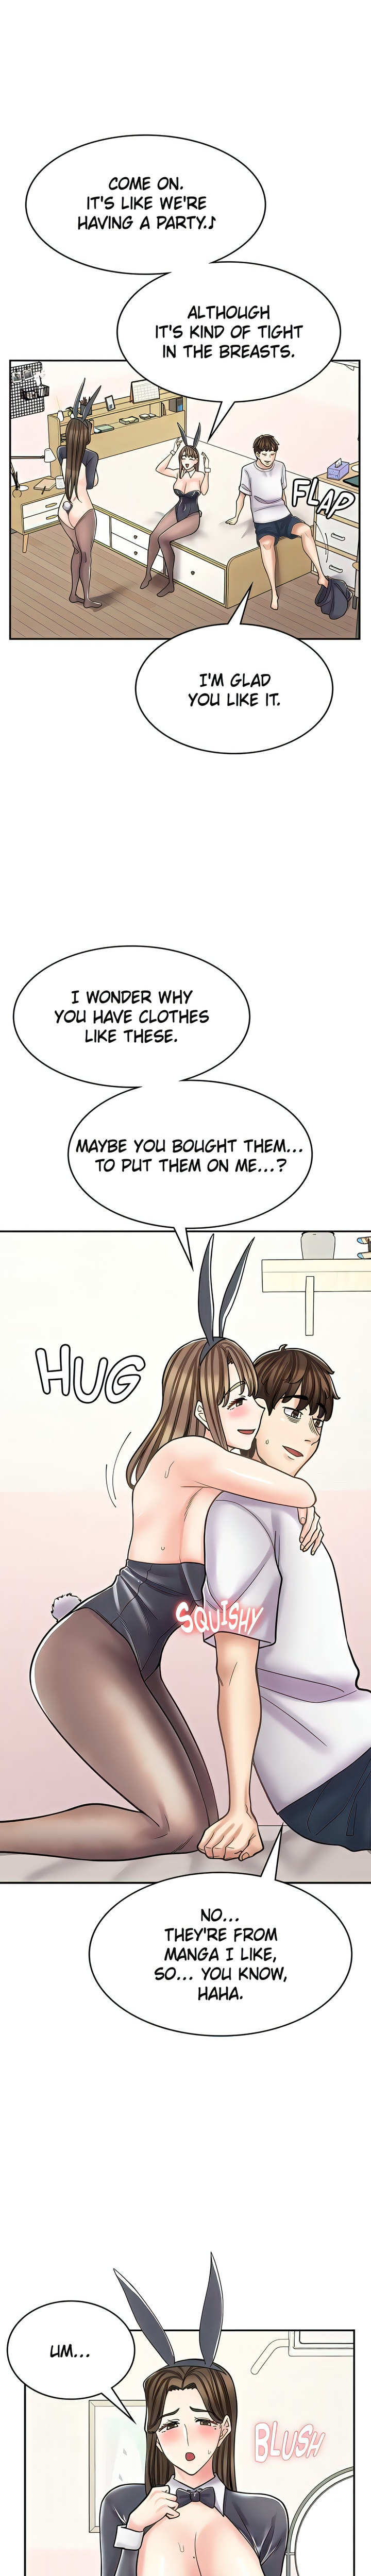 Erotic Manga Café Girls Chapter 42 - Page 4